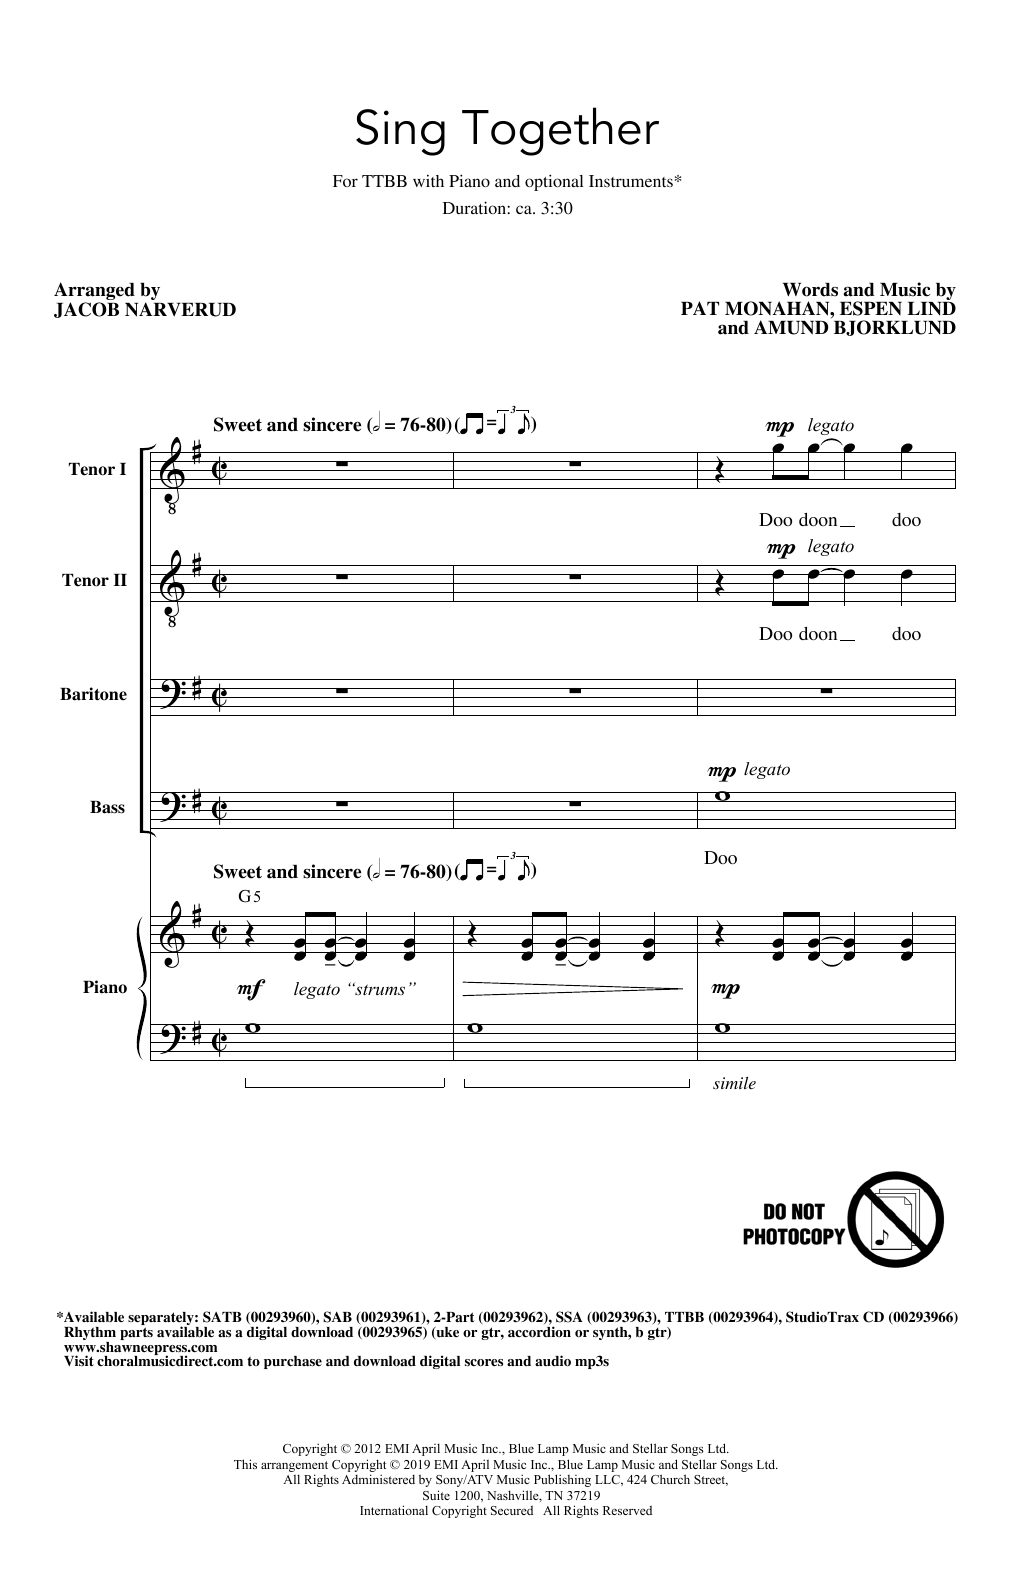 Train Sing Together (arr. Jacob Narverud) Sheet Music Notes & Chords for SSA Choir - Download or Print PDF